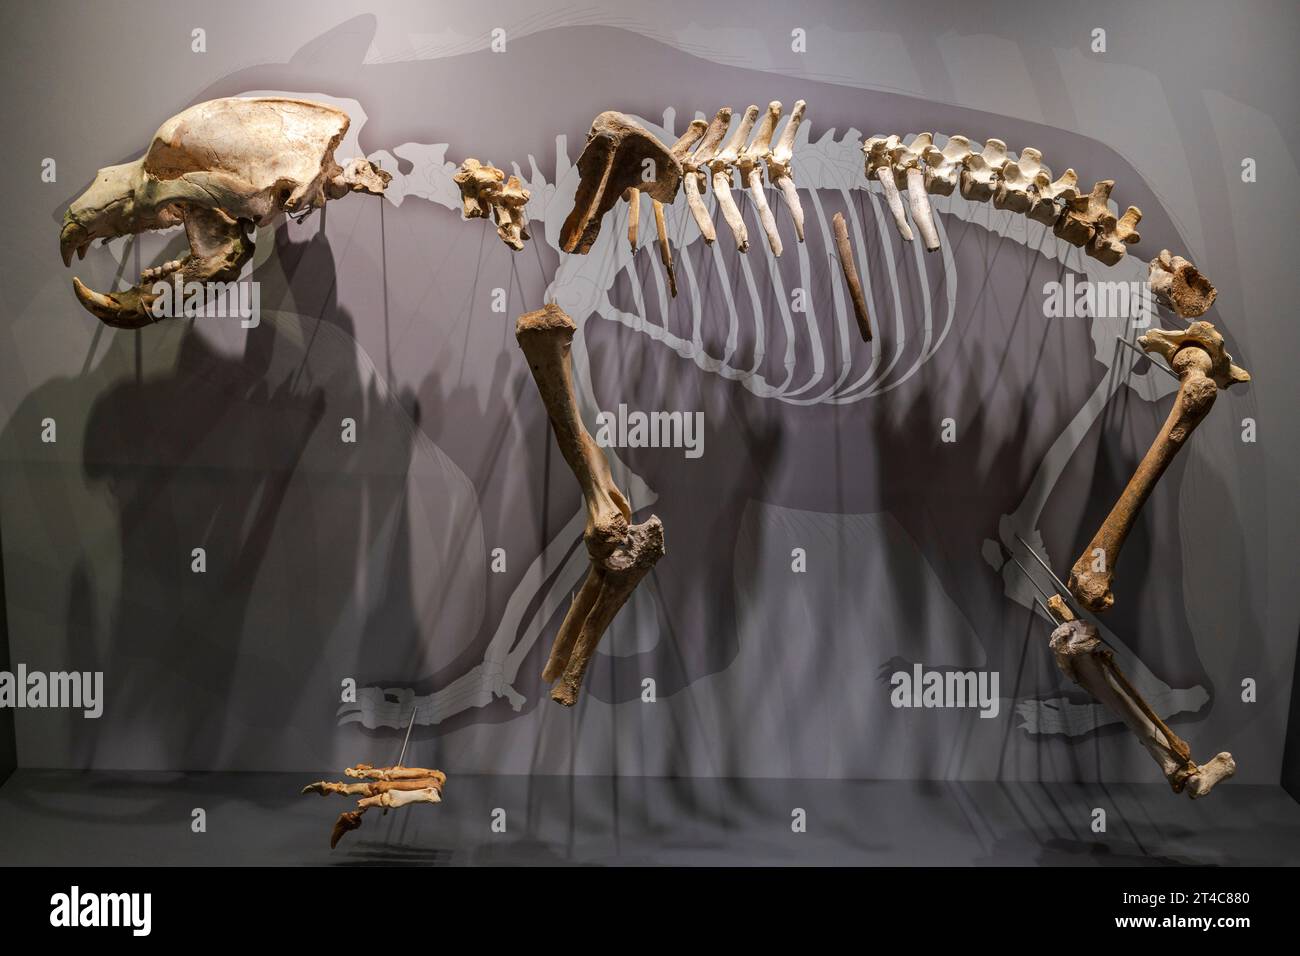 cave bear (Ursus spelaeus), Late Pleistocene, Museum of prehistory and archeology (MUPAC), Santander, Cantabria, Spain Stock Photo